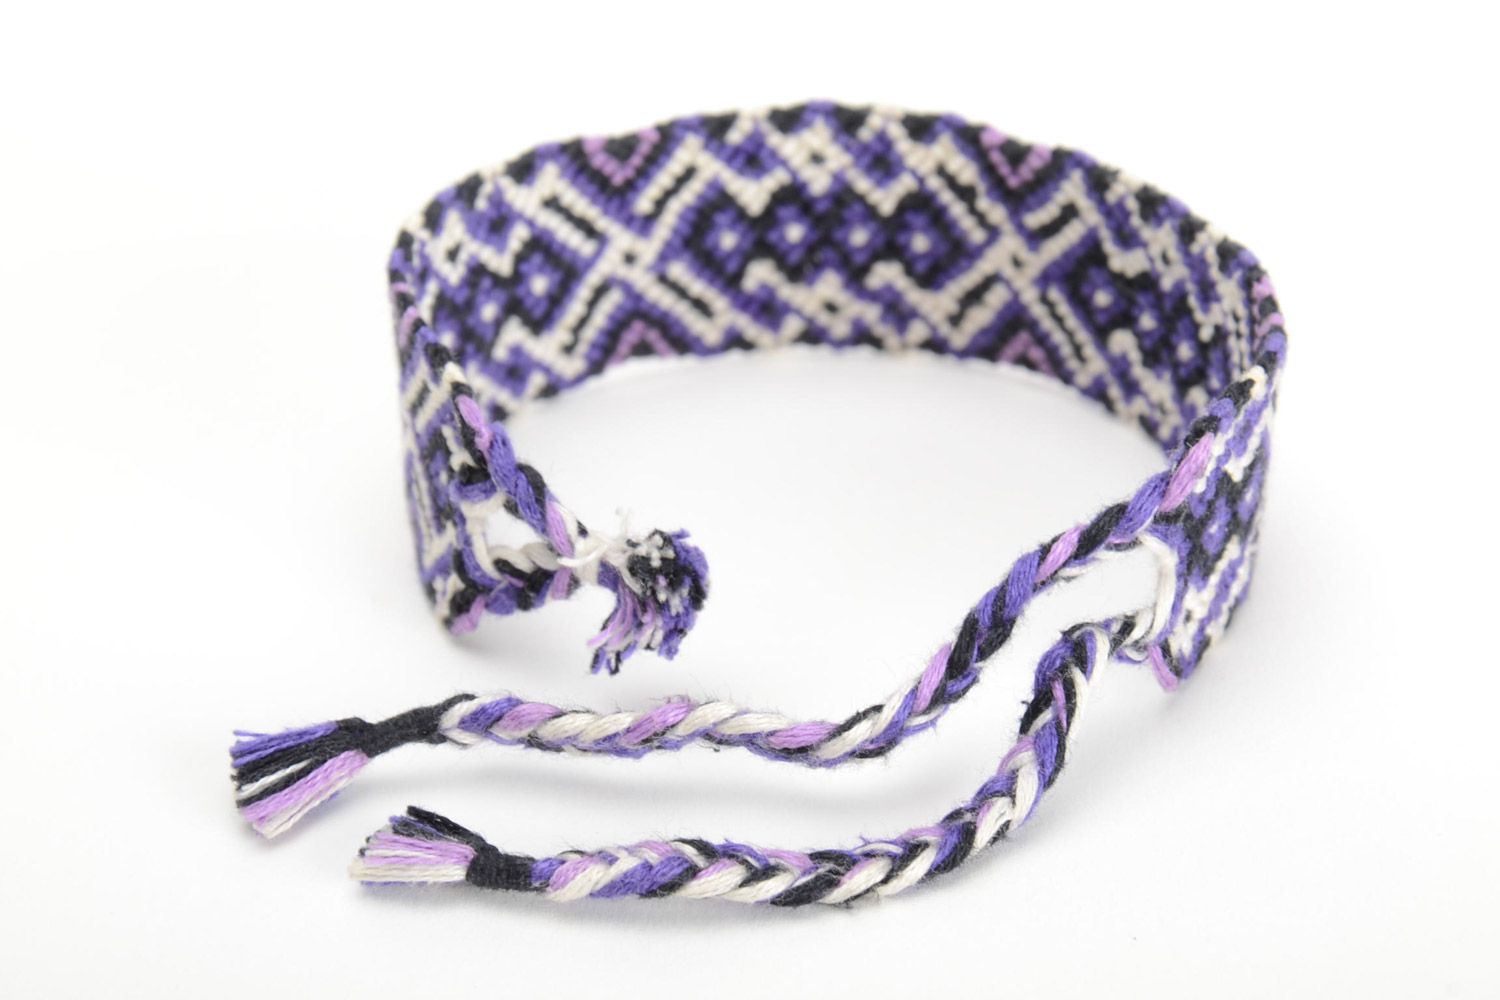 Handmade friendship wrist bracelet woven of threads in ethnic style unisex photo 2